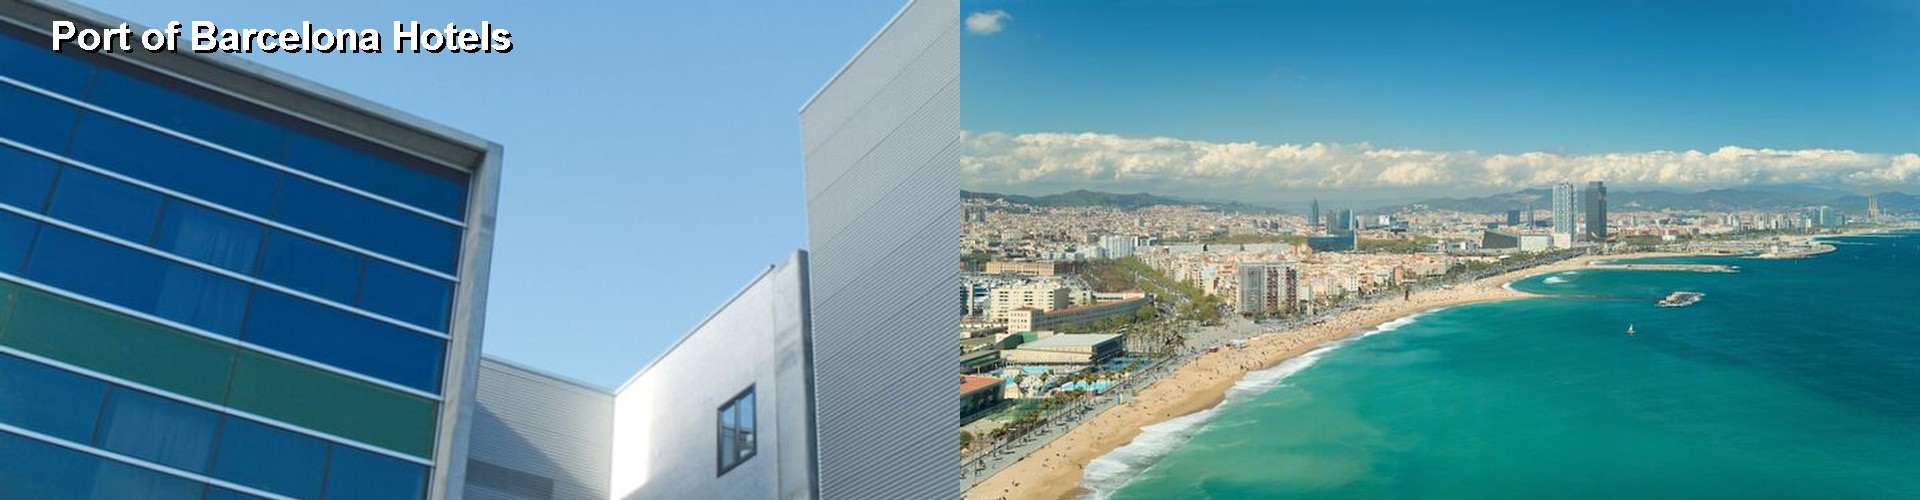 5 Best Hotels near Port of Barcelona